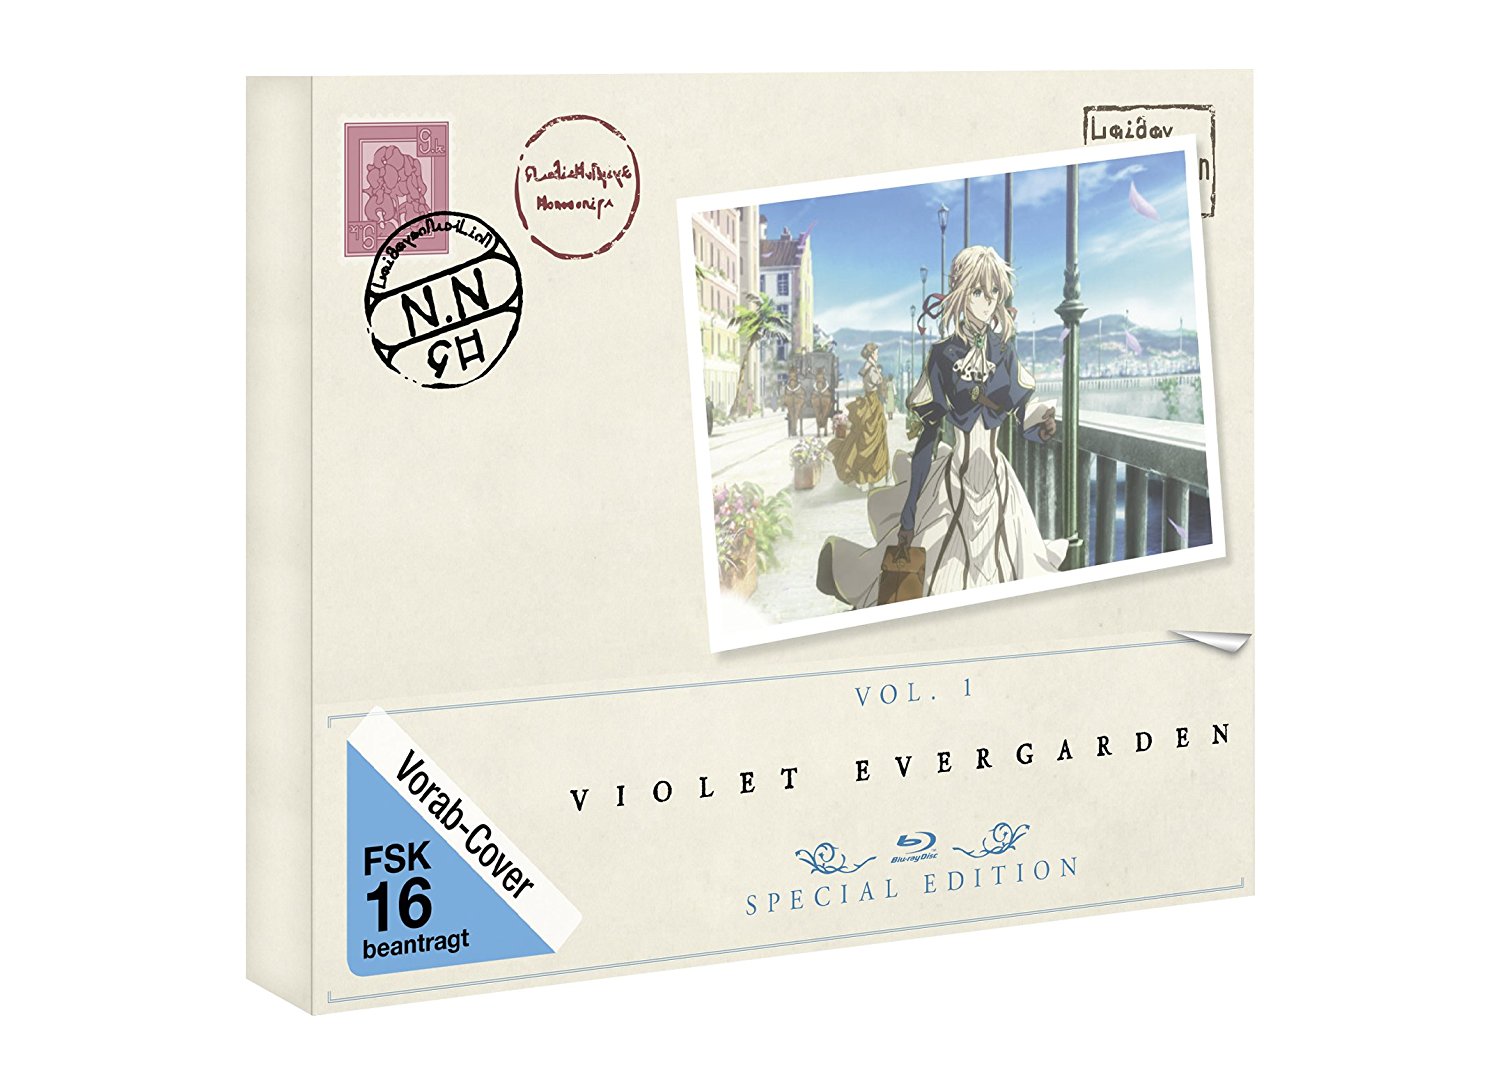 Violet Evergarden - Cover